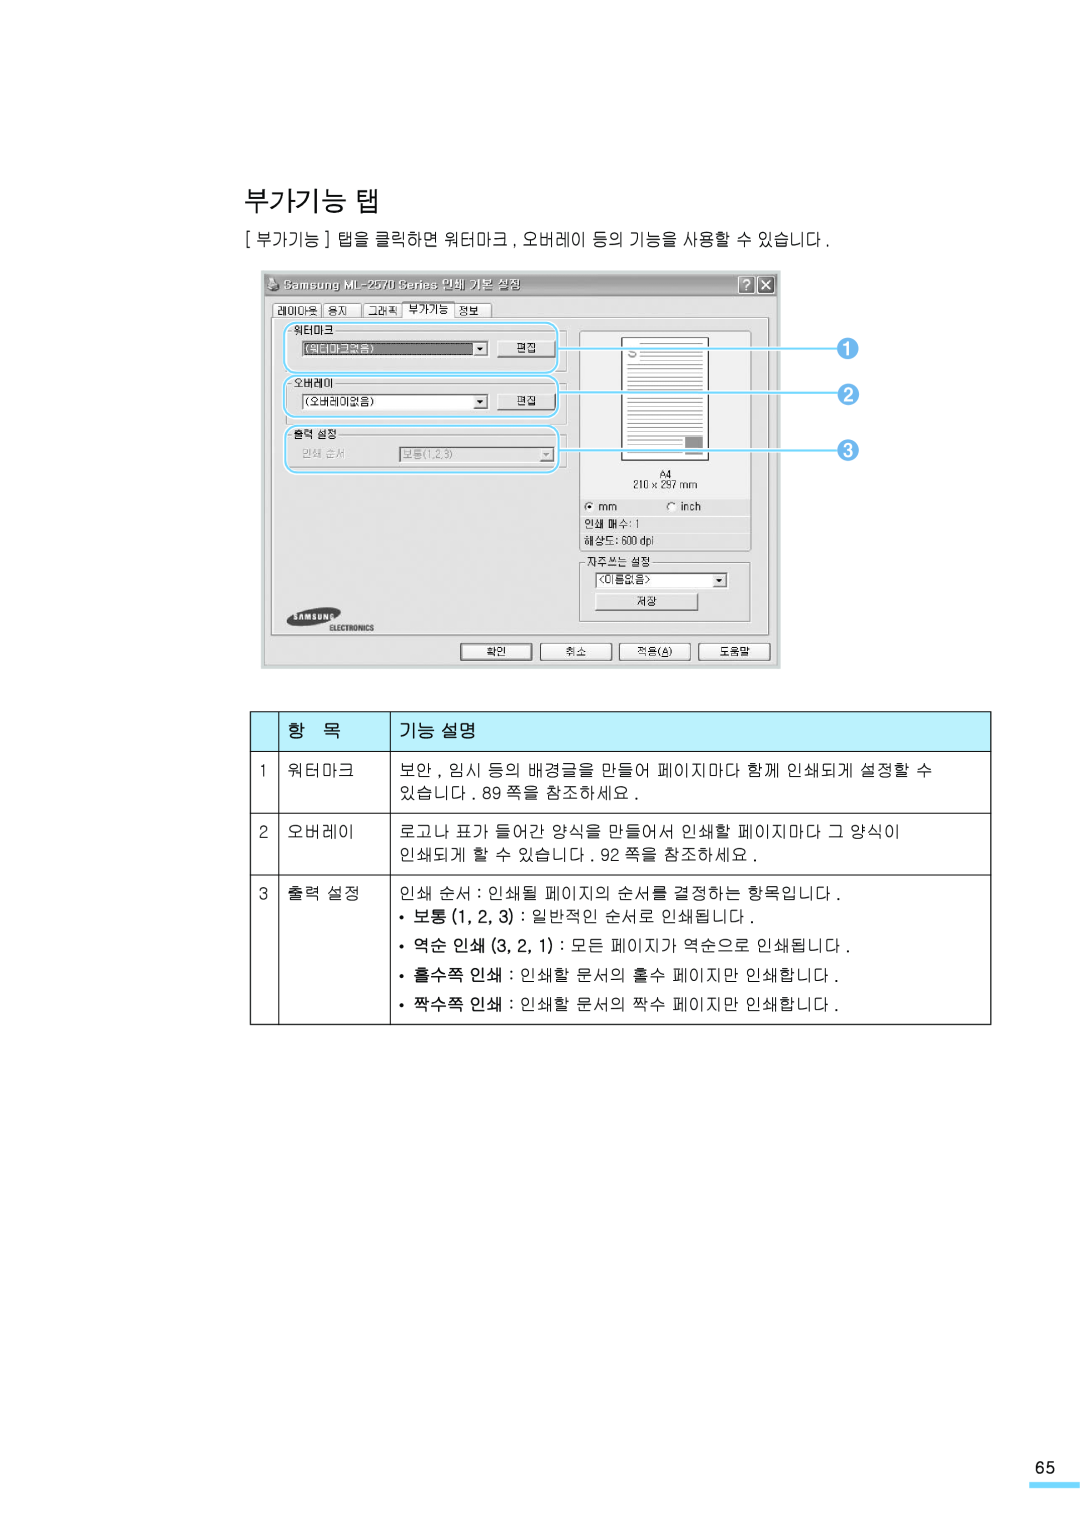 Samsung ML-2571N manual 부가기능 탭을 클릭하면 워터마크 , 오버레이 등의 기능을 사용할 수 있습니다, 기능 설명 